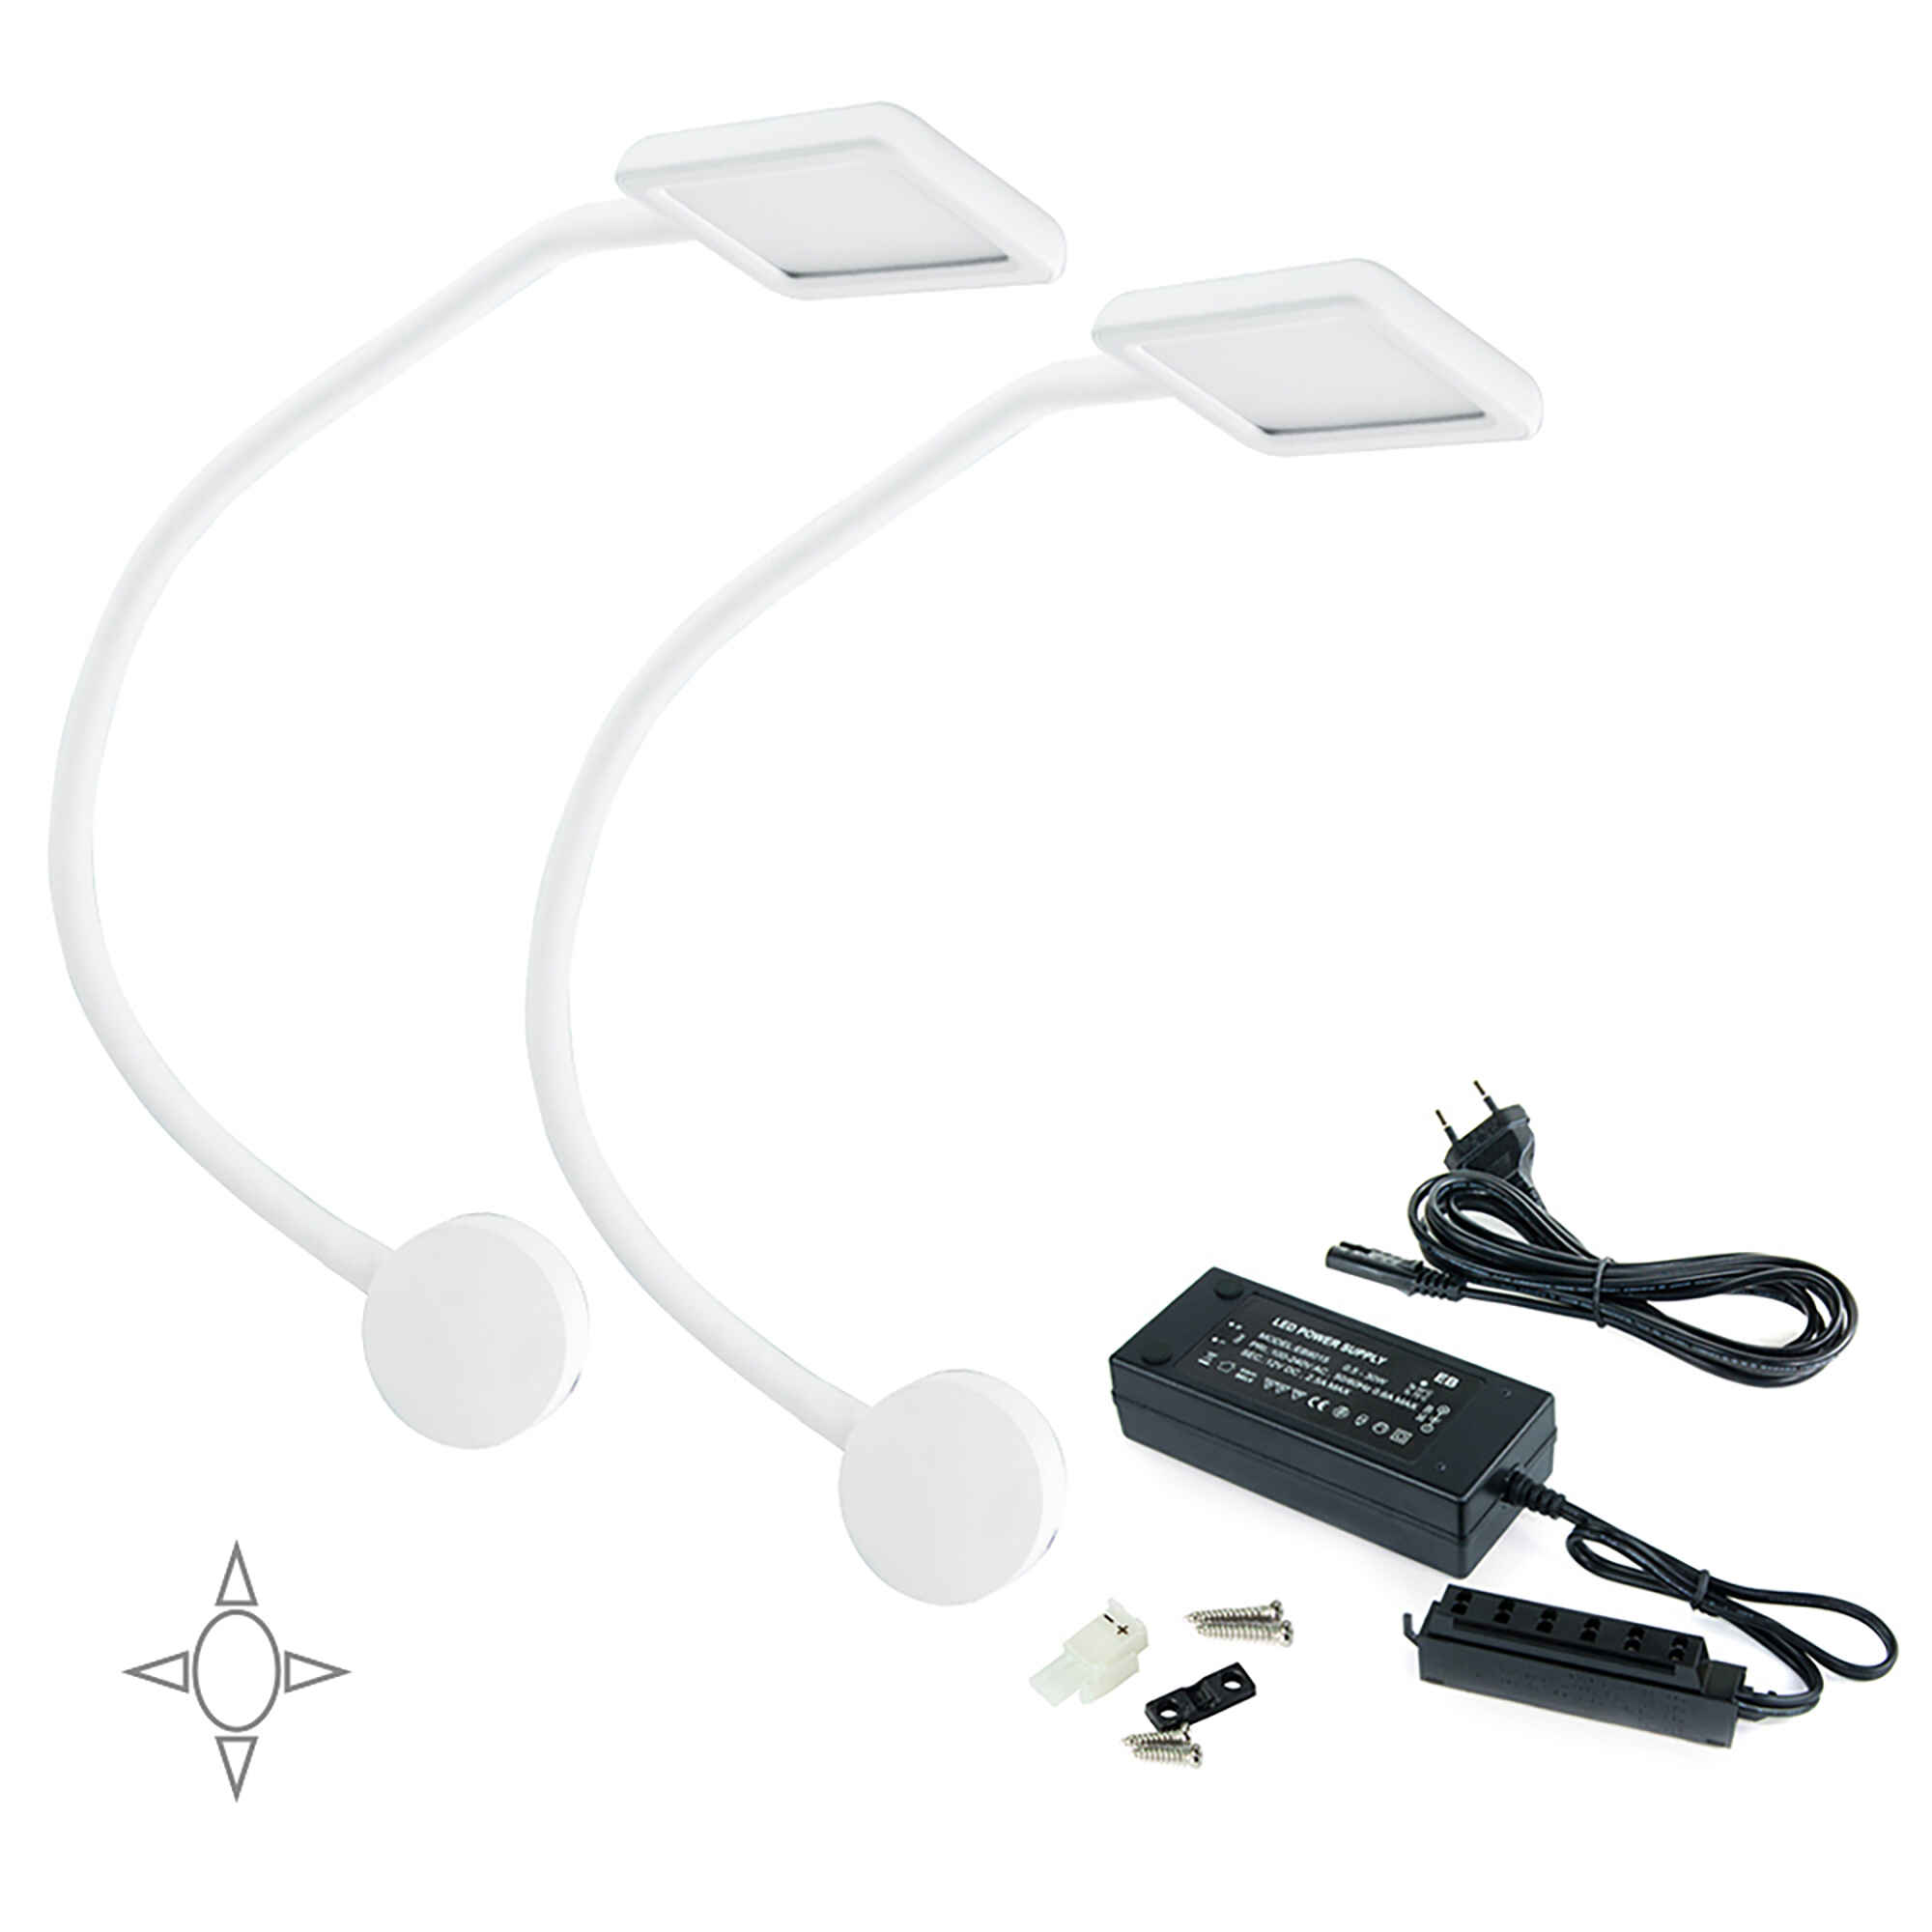 Aplique LED Kuma cuadrado, brazo flexible, sensor táctil, 2 USB, Luz blanca natural, Plástico, Blanco, 2 ud.